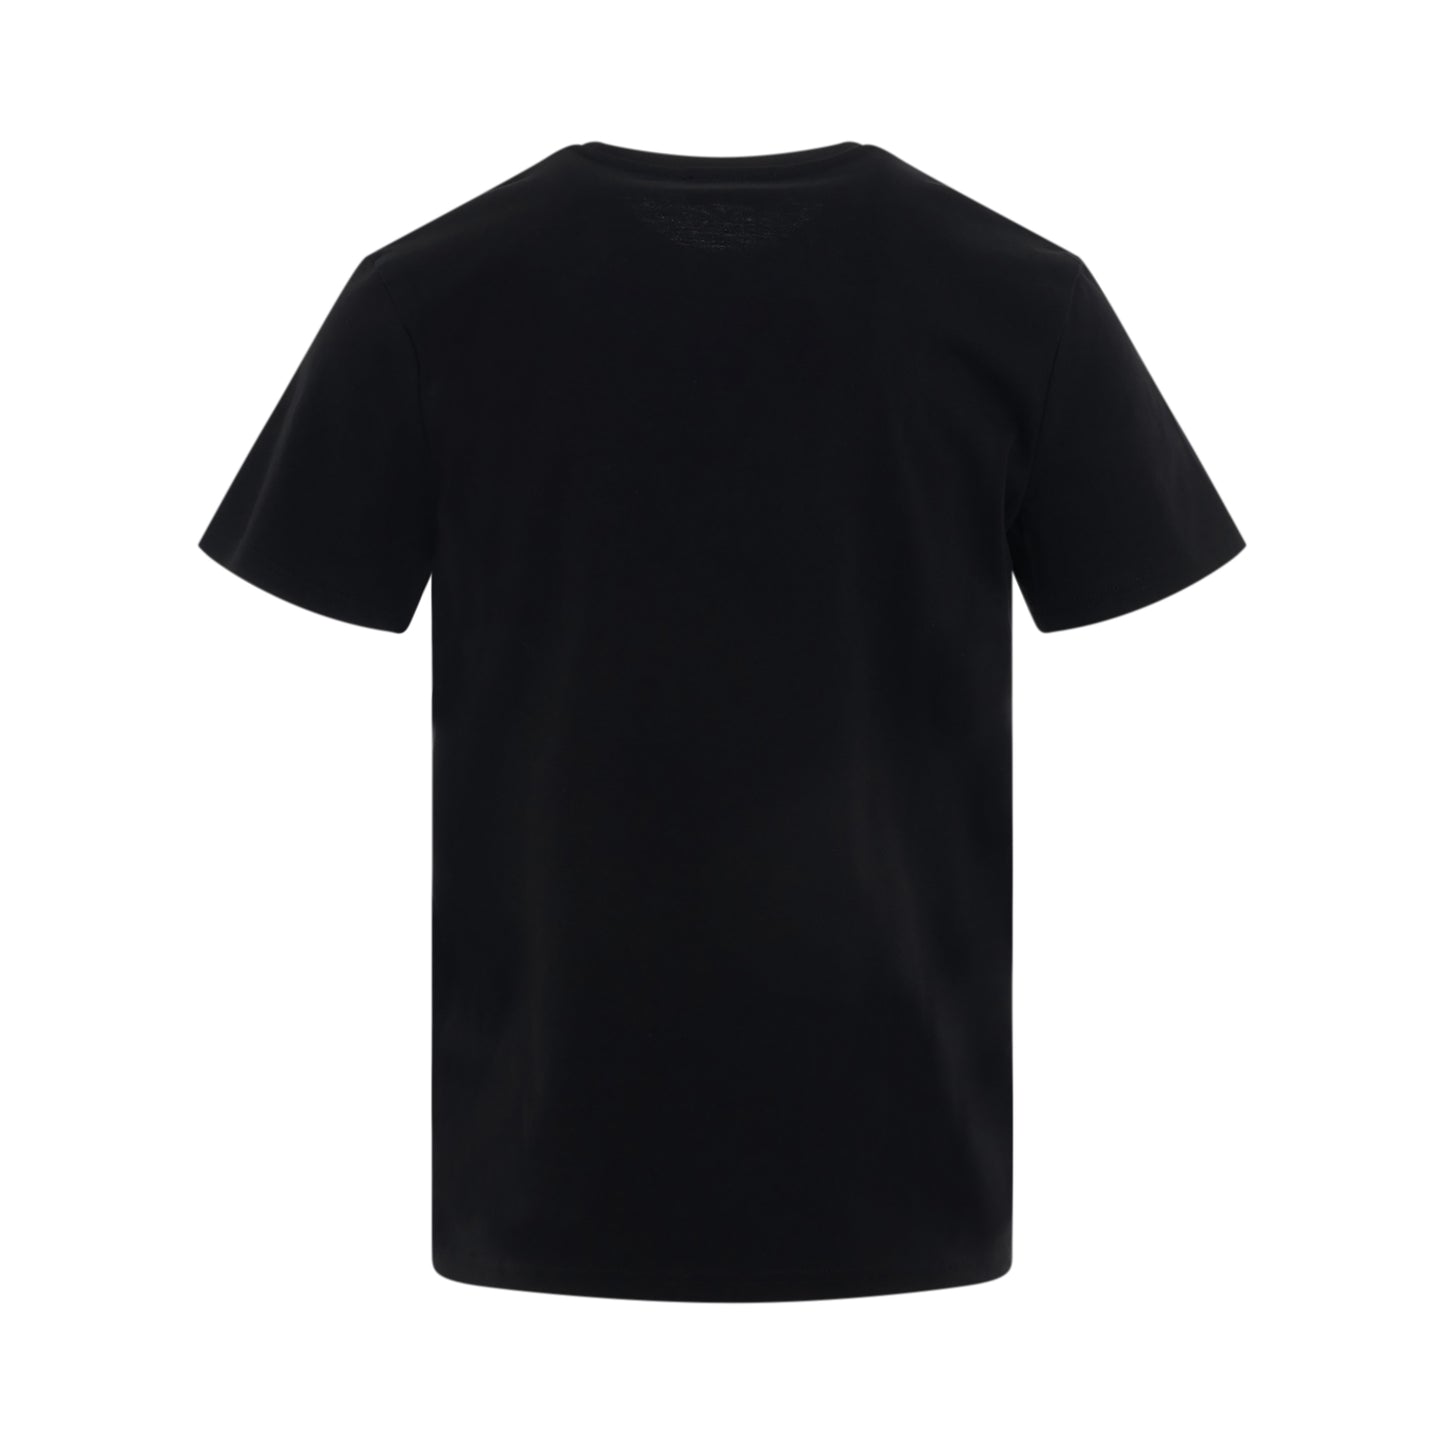 Fantasia T-Shirt in Black